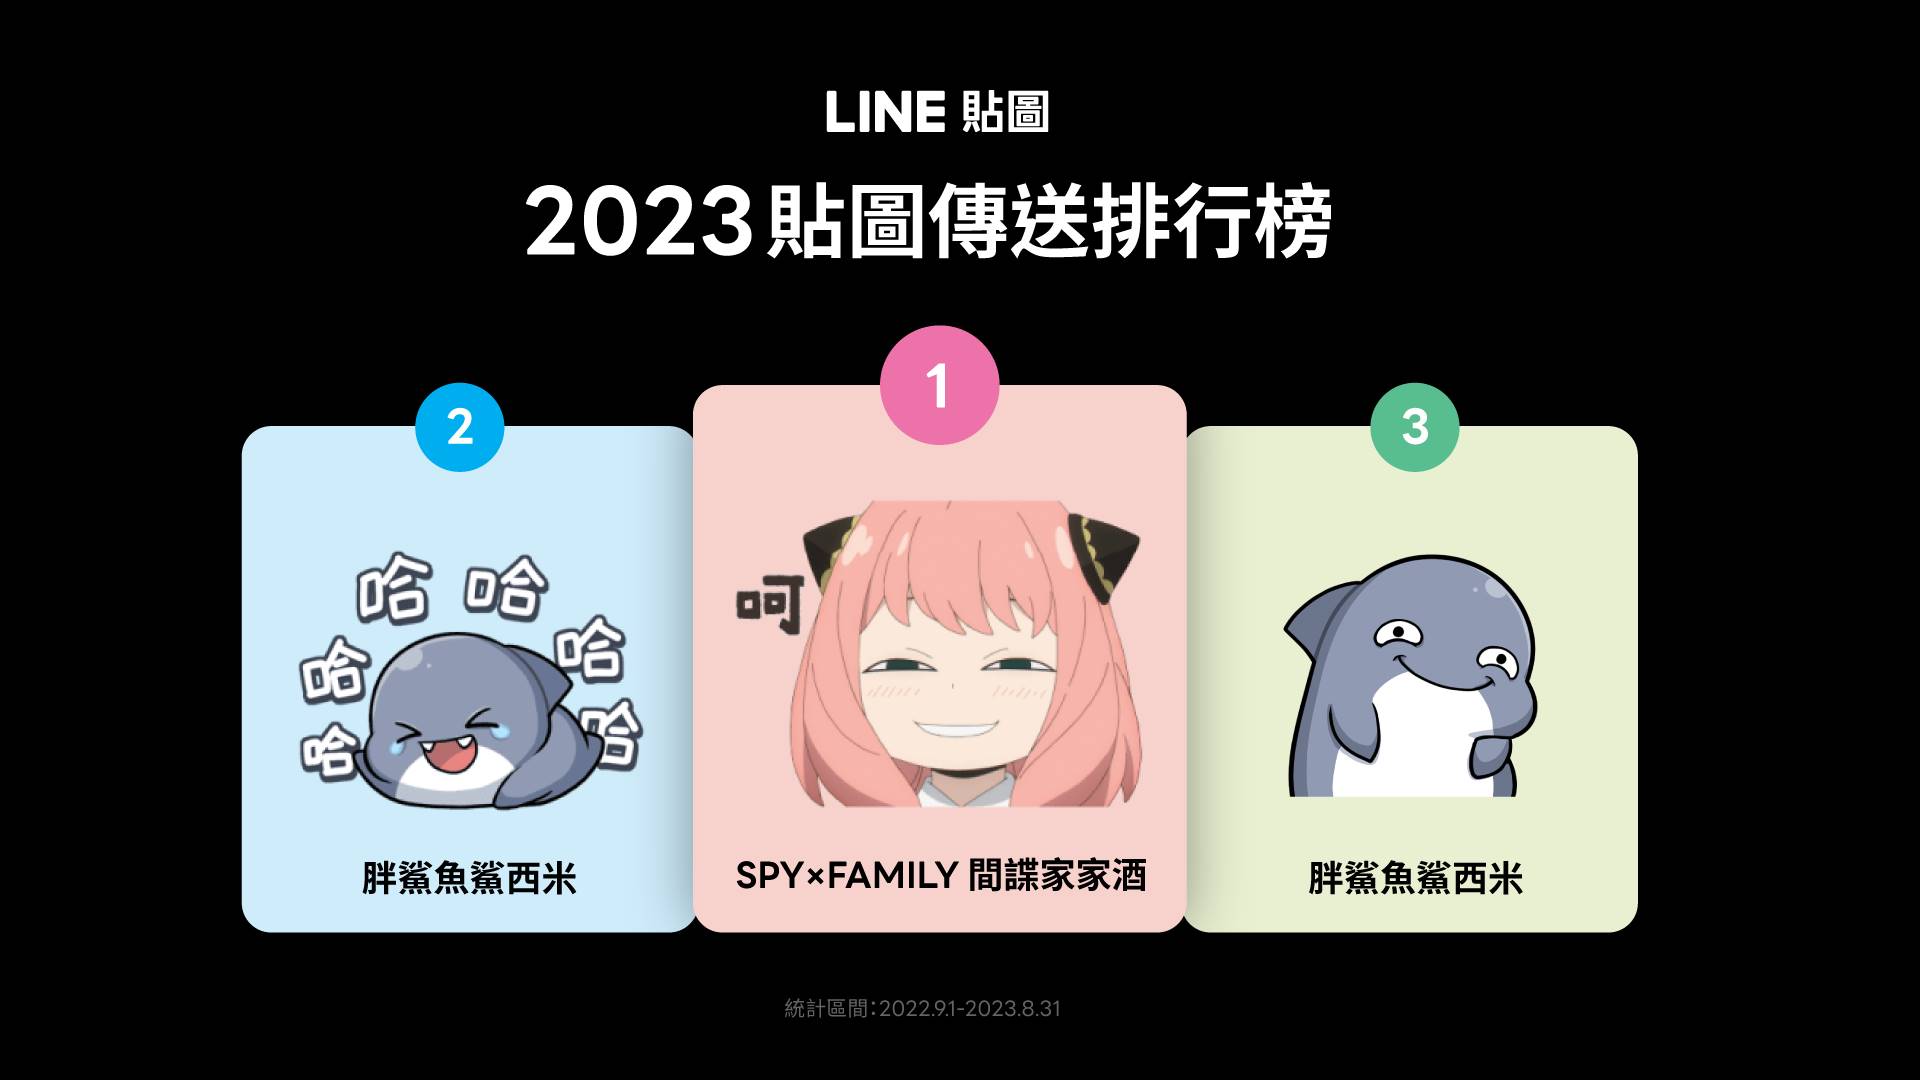 LINE是台灣人最普遍使用的通訊軟體，除了社交聯繫方面相當實用之外，還有眾多可愛、逗趣的貼圖吸引大家目光。LINE貼圖小舖更時常推出各式各樣可愛又生動的貼圖，除了官方原創之外，許多品牌也經常與插畫家、藝術家合作打造專屬樣式，吸引用戶下載。 LINE貼圖推出至今已滿12年，LINE官方也在十月份「貼圖誕生月」公開許多不為人知的貼圖冷知識！